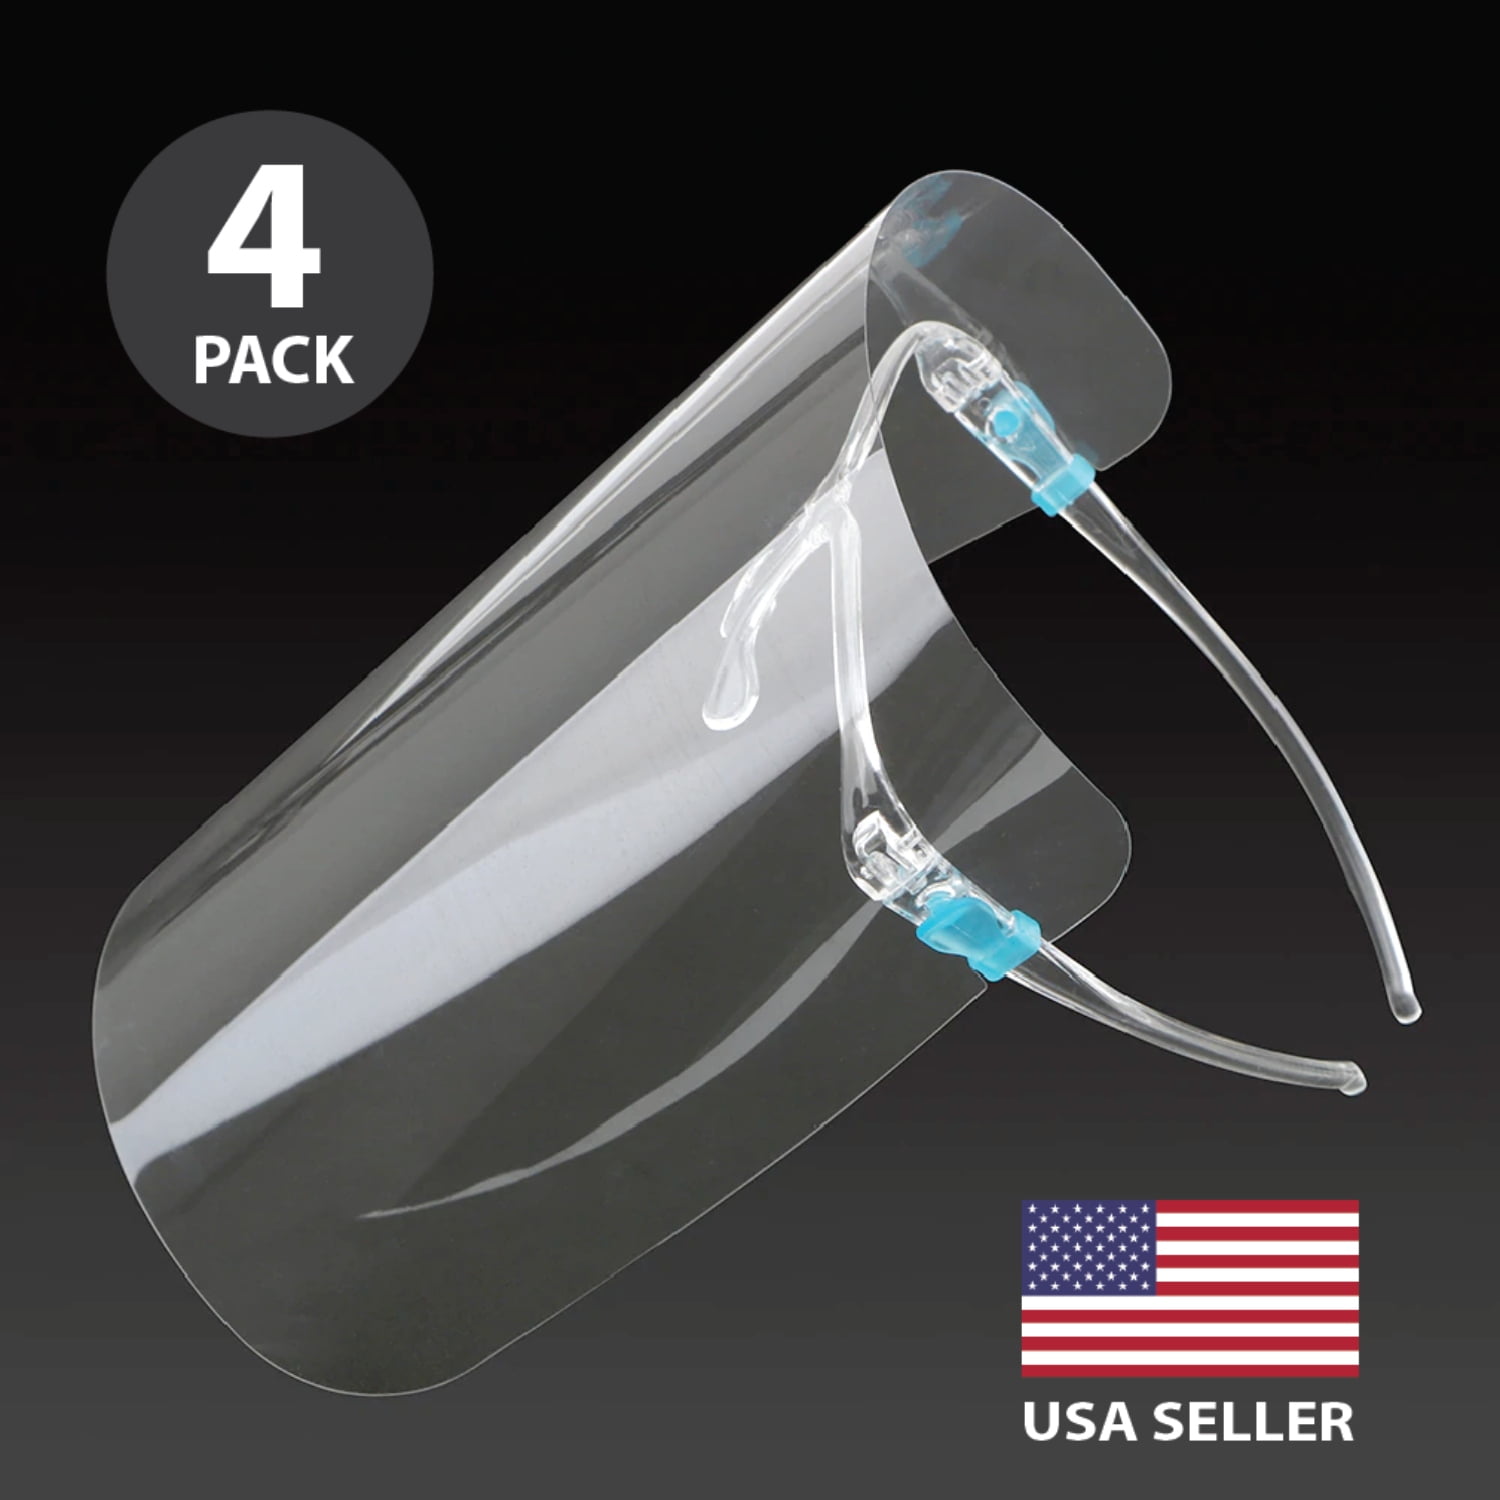 Details about   WEST BIKING Adjustable Strap Protective Glasses Anti-Splash Wind-Proof Safety 